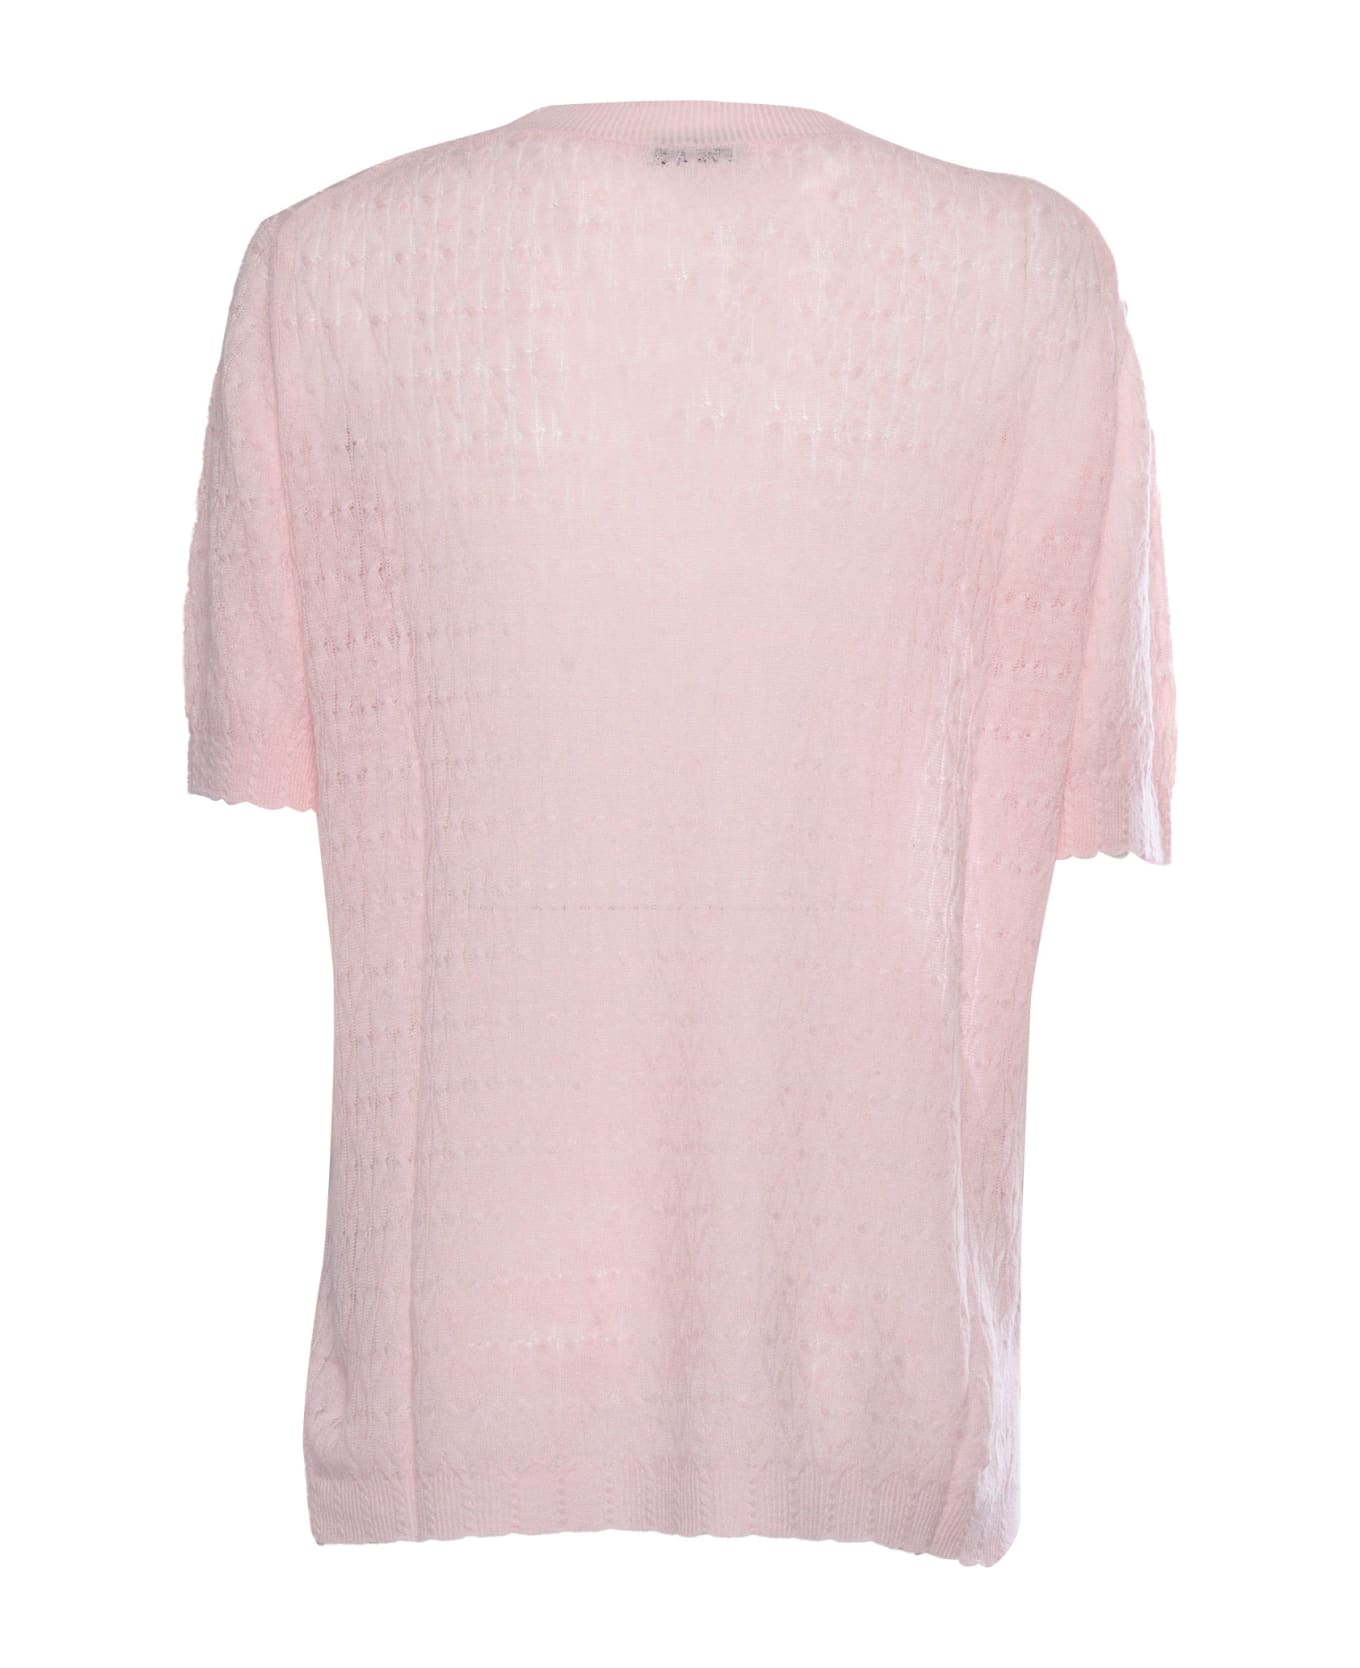 Ballantyne Pink Linen Sweater - PINK